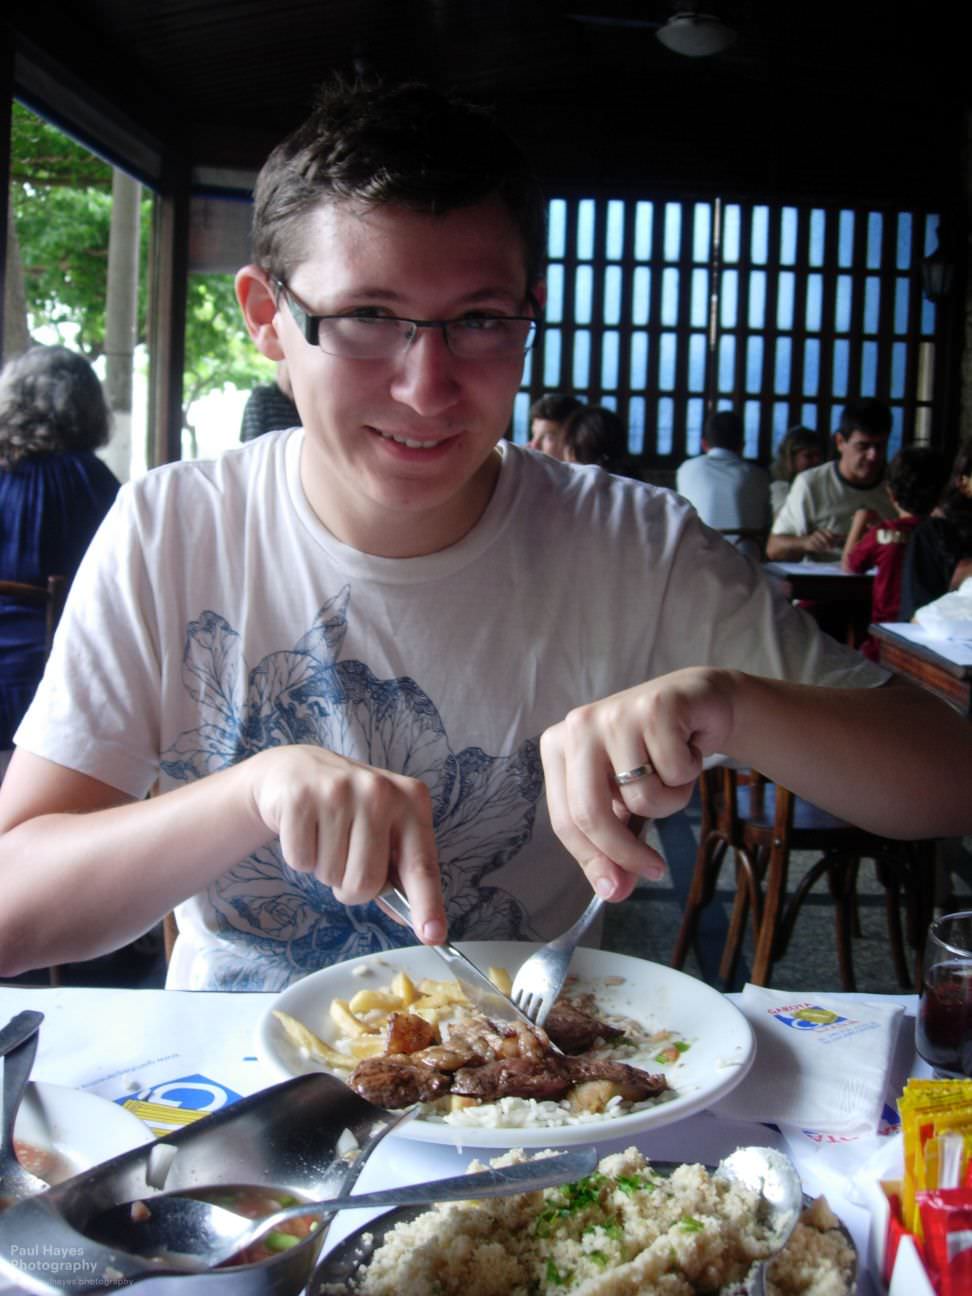 Paul enjoying steak and chips at Garota da Urca